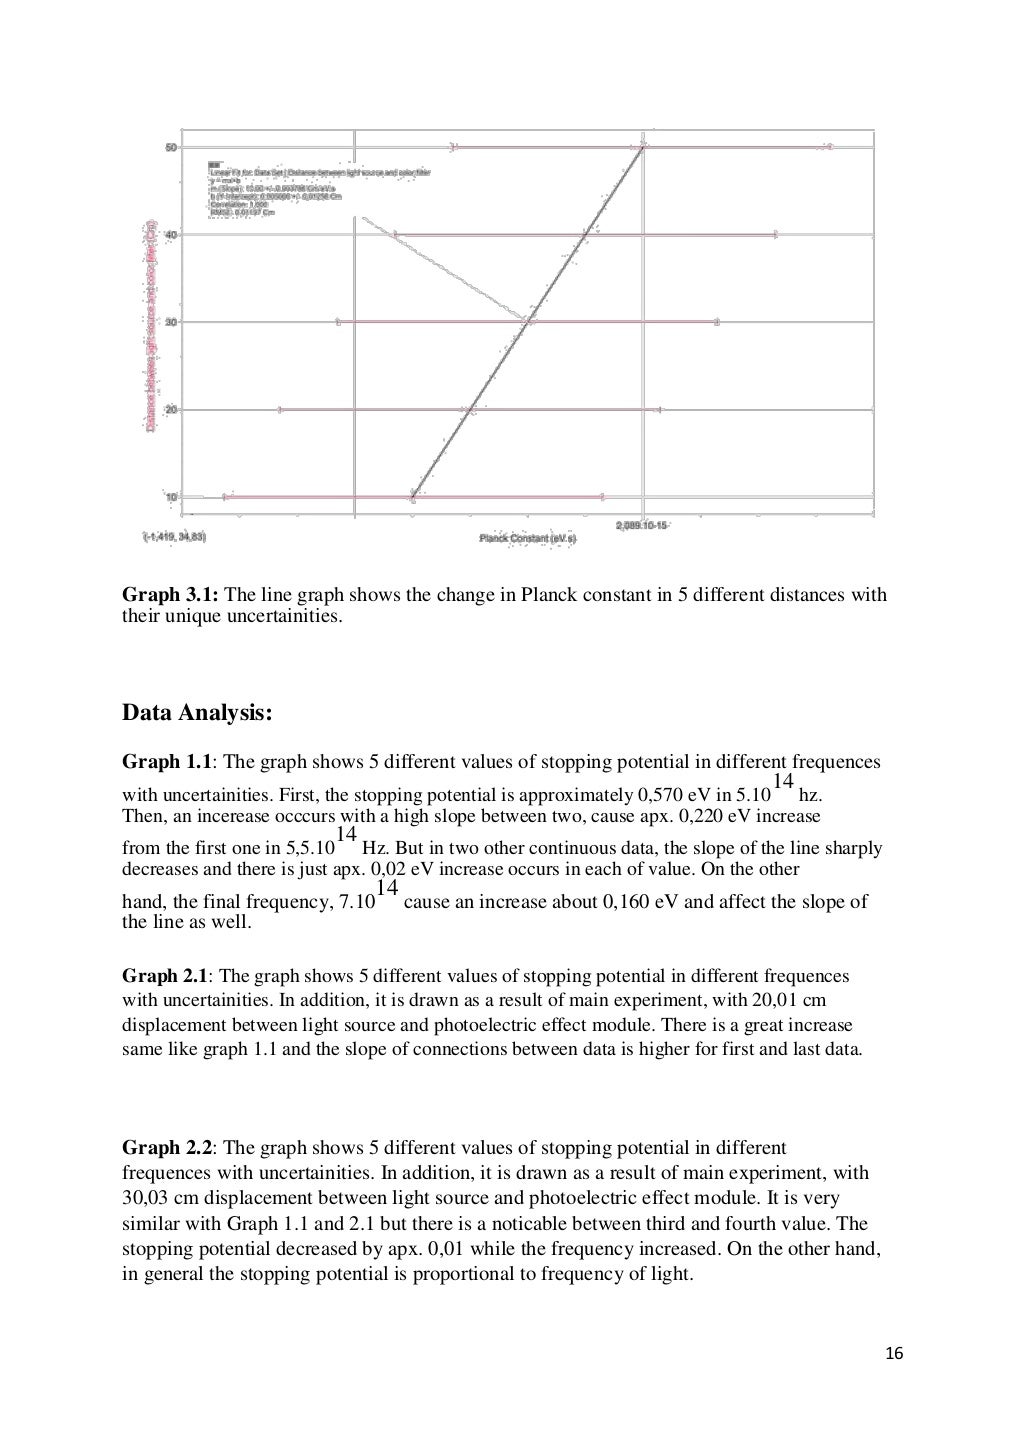 ib physics extended essay example